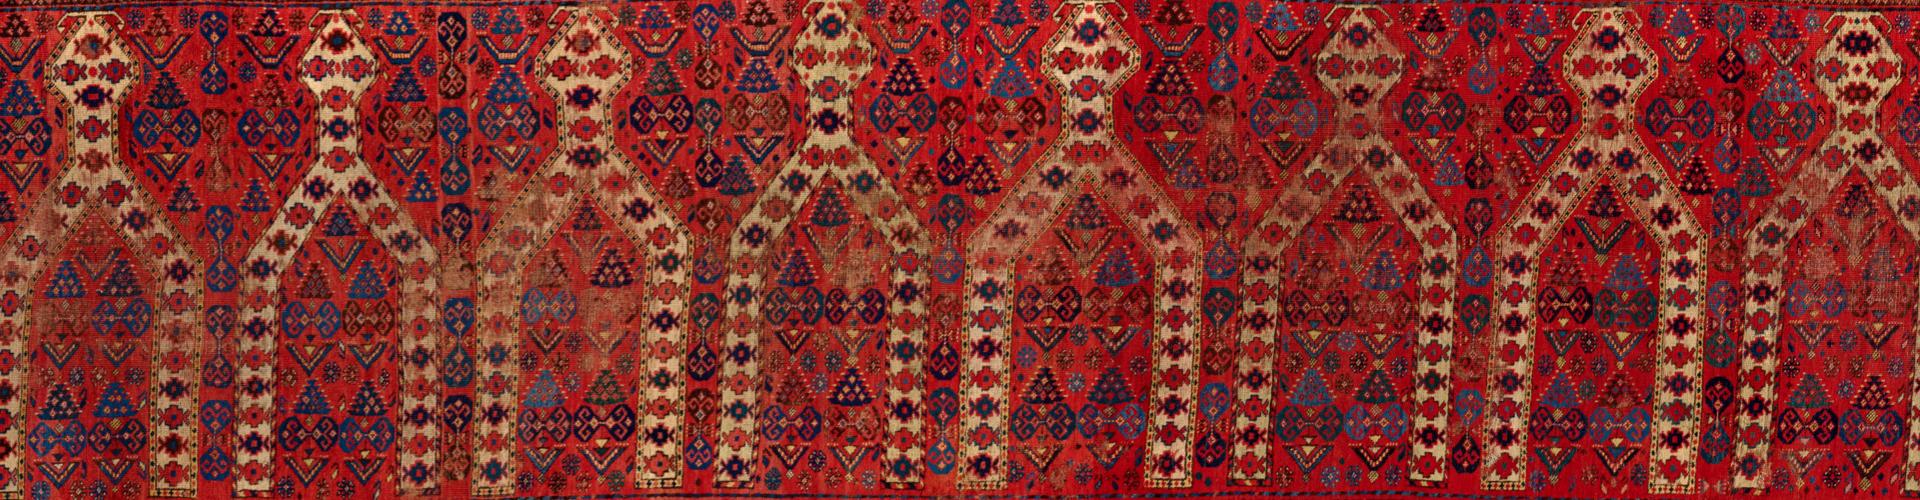 Detail of prayer carpet with arch motifs